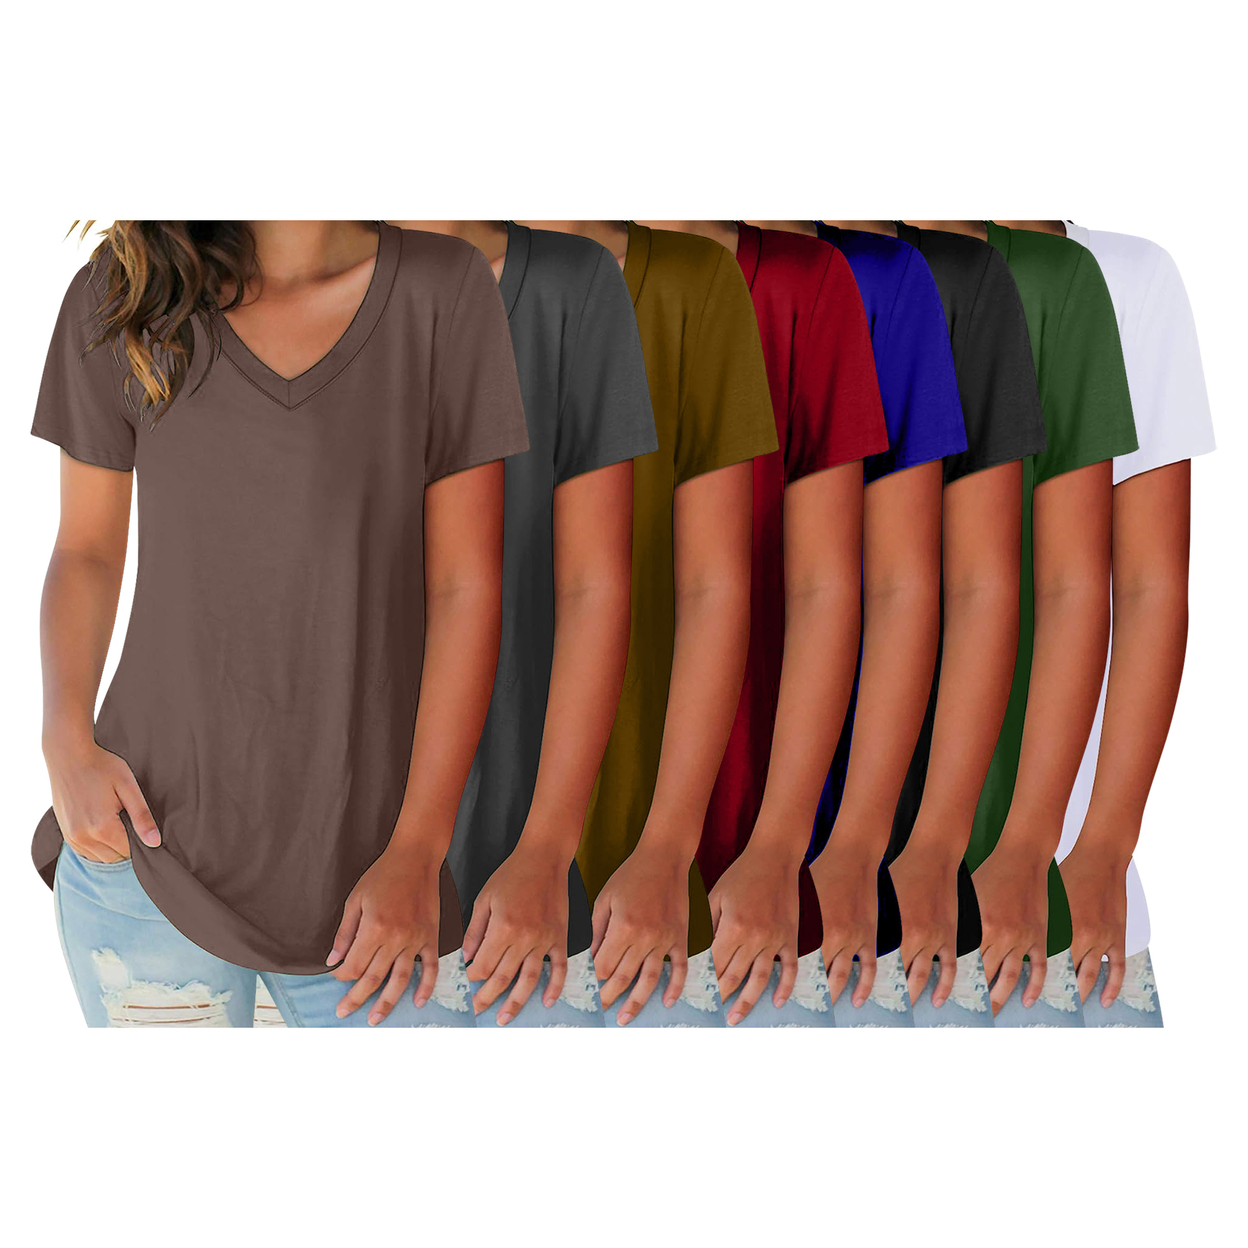 2-Pack: Women's Ultra Soft Smooth Cotton Blend Basic V-Neck Short Sleeve Shirts - Navy & Red, Xx-large